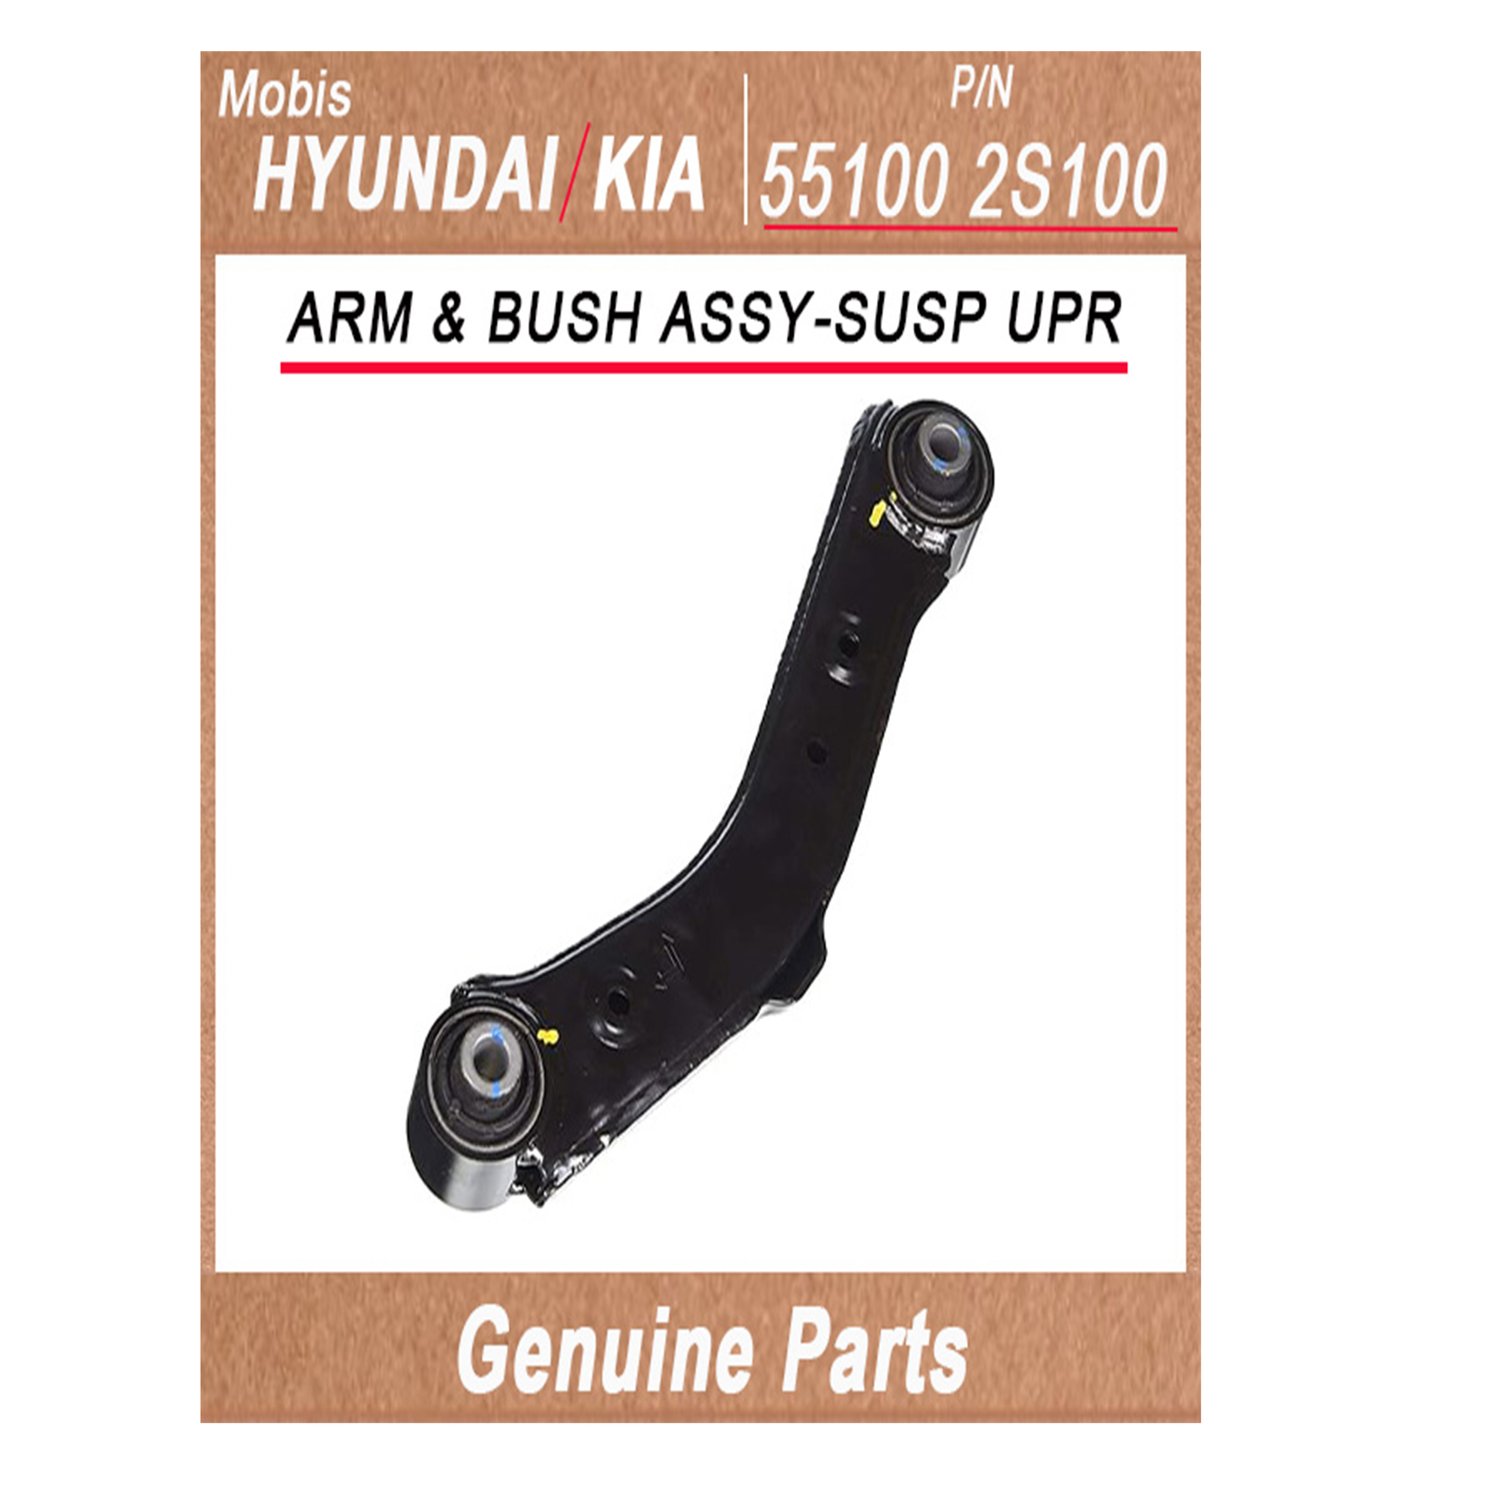 551002S100 _ ARM _ BUSH ASSY_SUSP UPR _ Genuine Korean Automotive Spare Parts _ Hyundai Kia _Mobis_